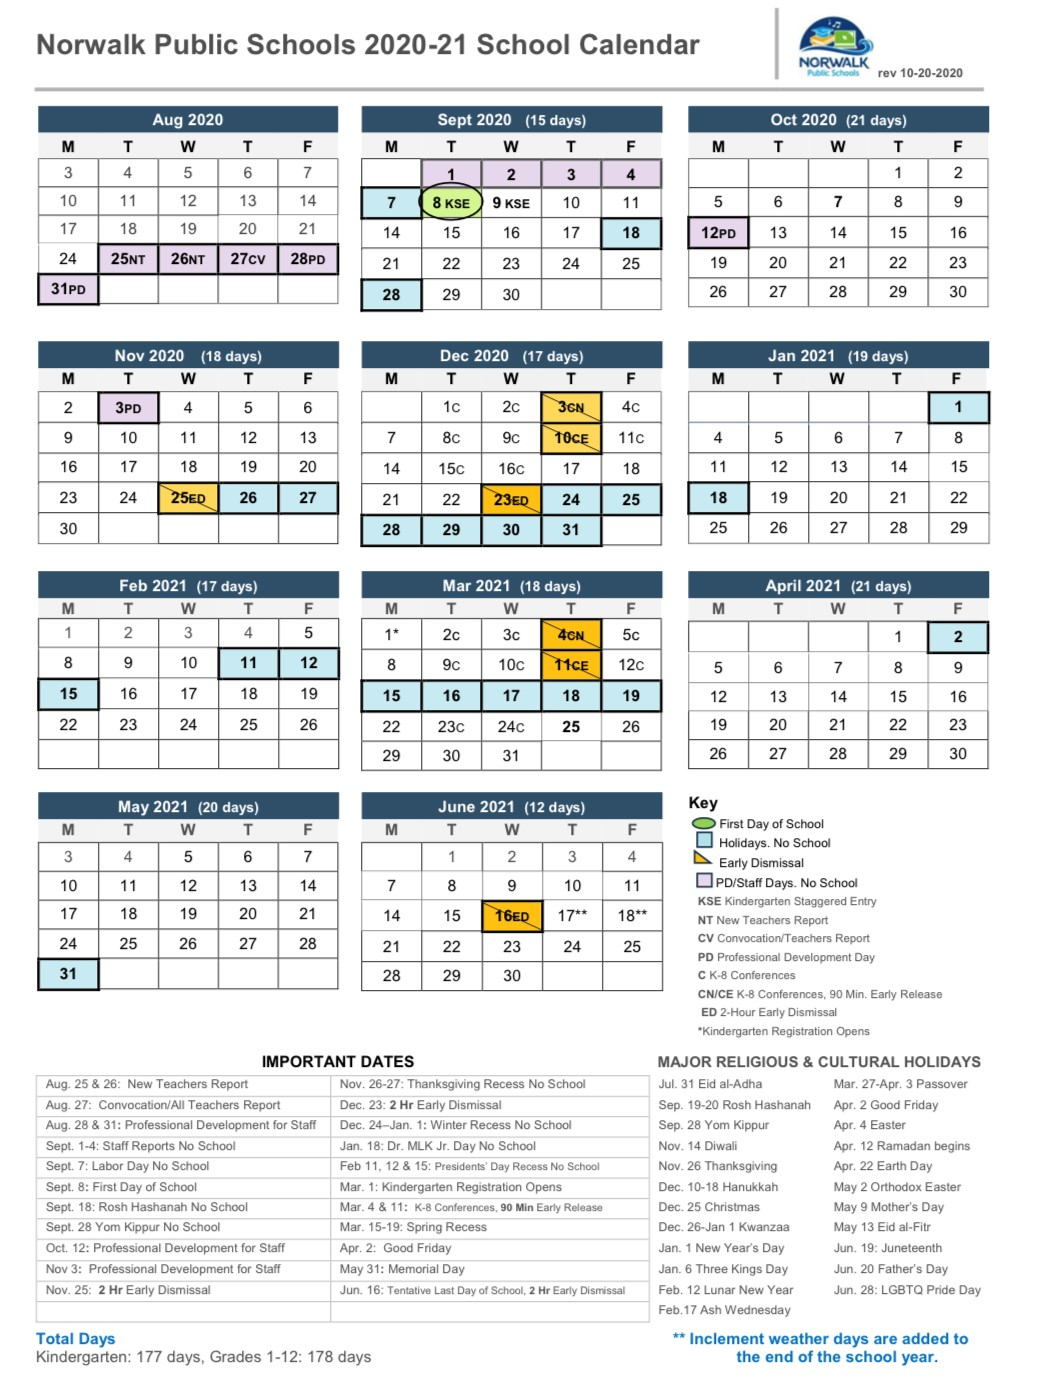 District Calendar - Norwalk Public Schools